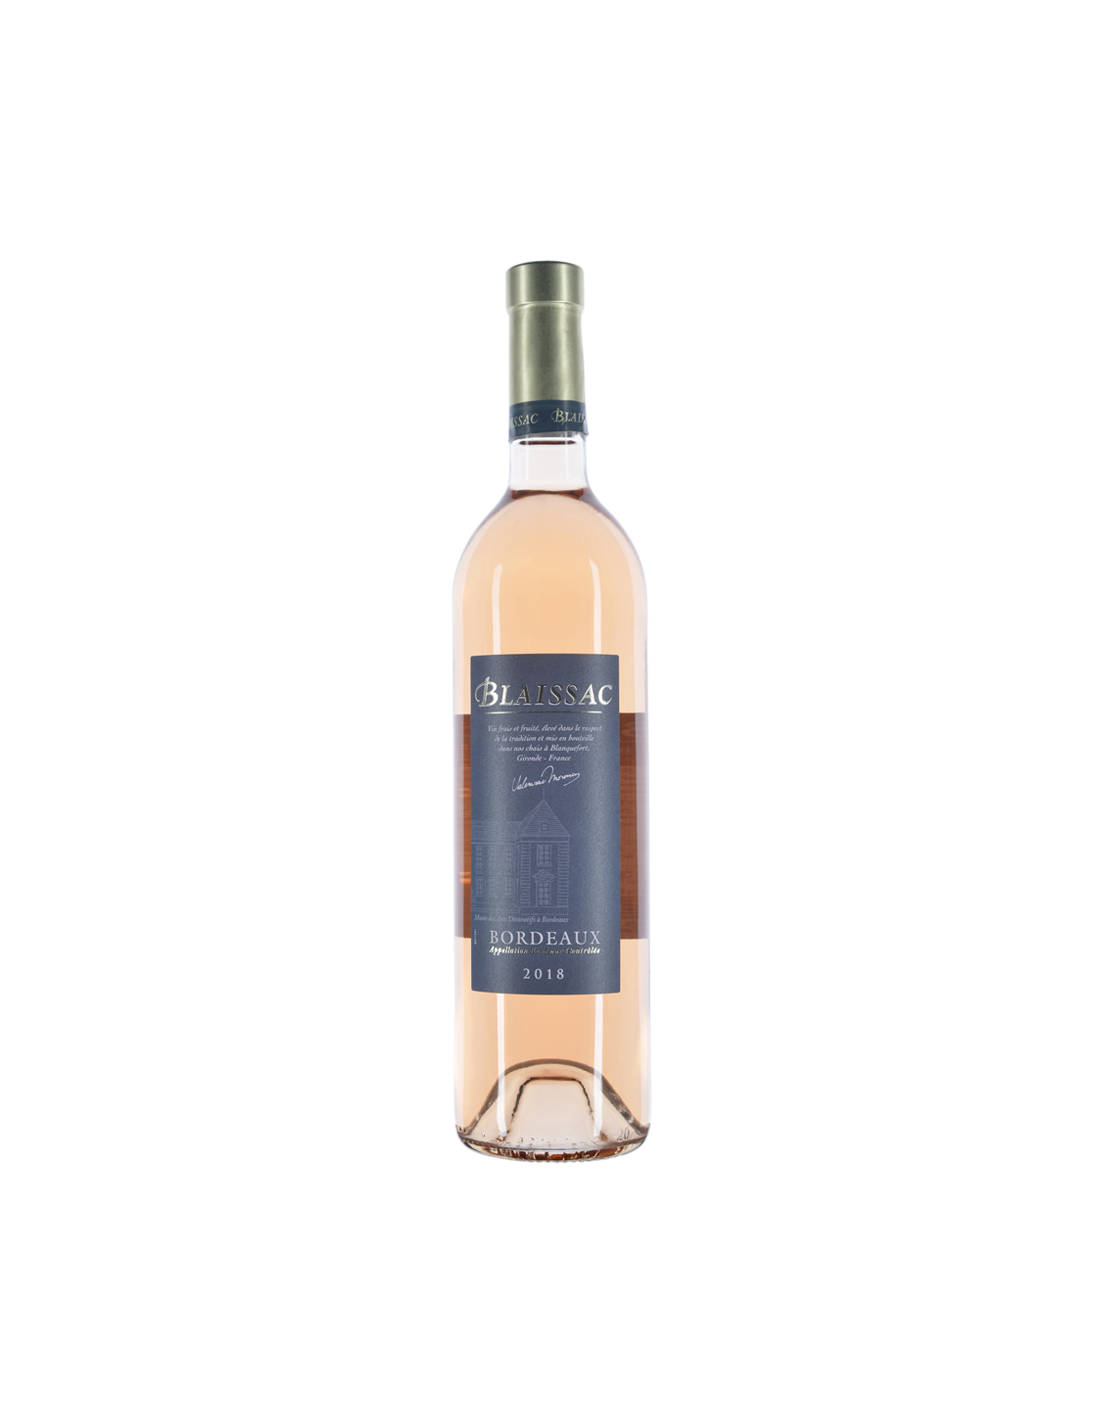 Vin roze sec, Blaissac, Bordeaux, 12.5% alc., 0.75L, Franta